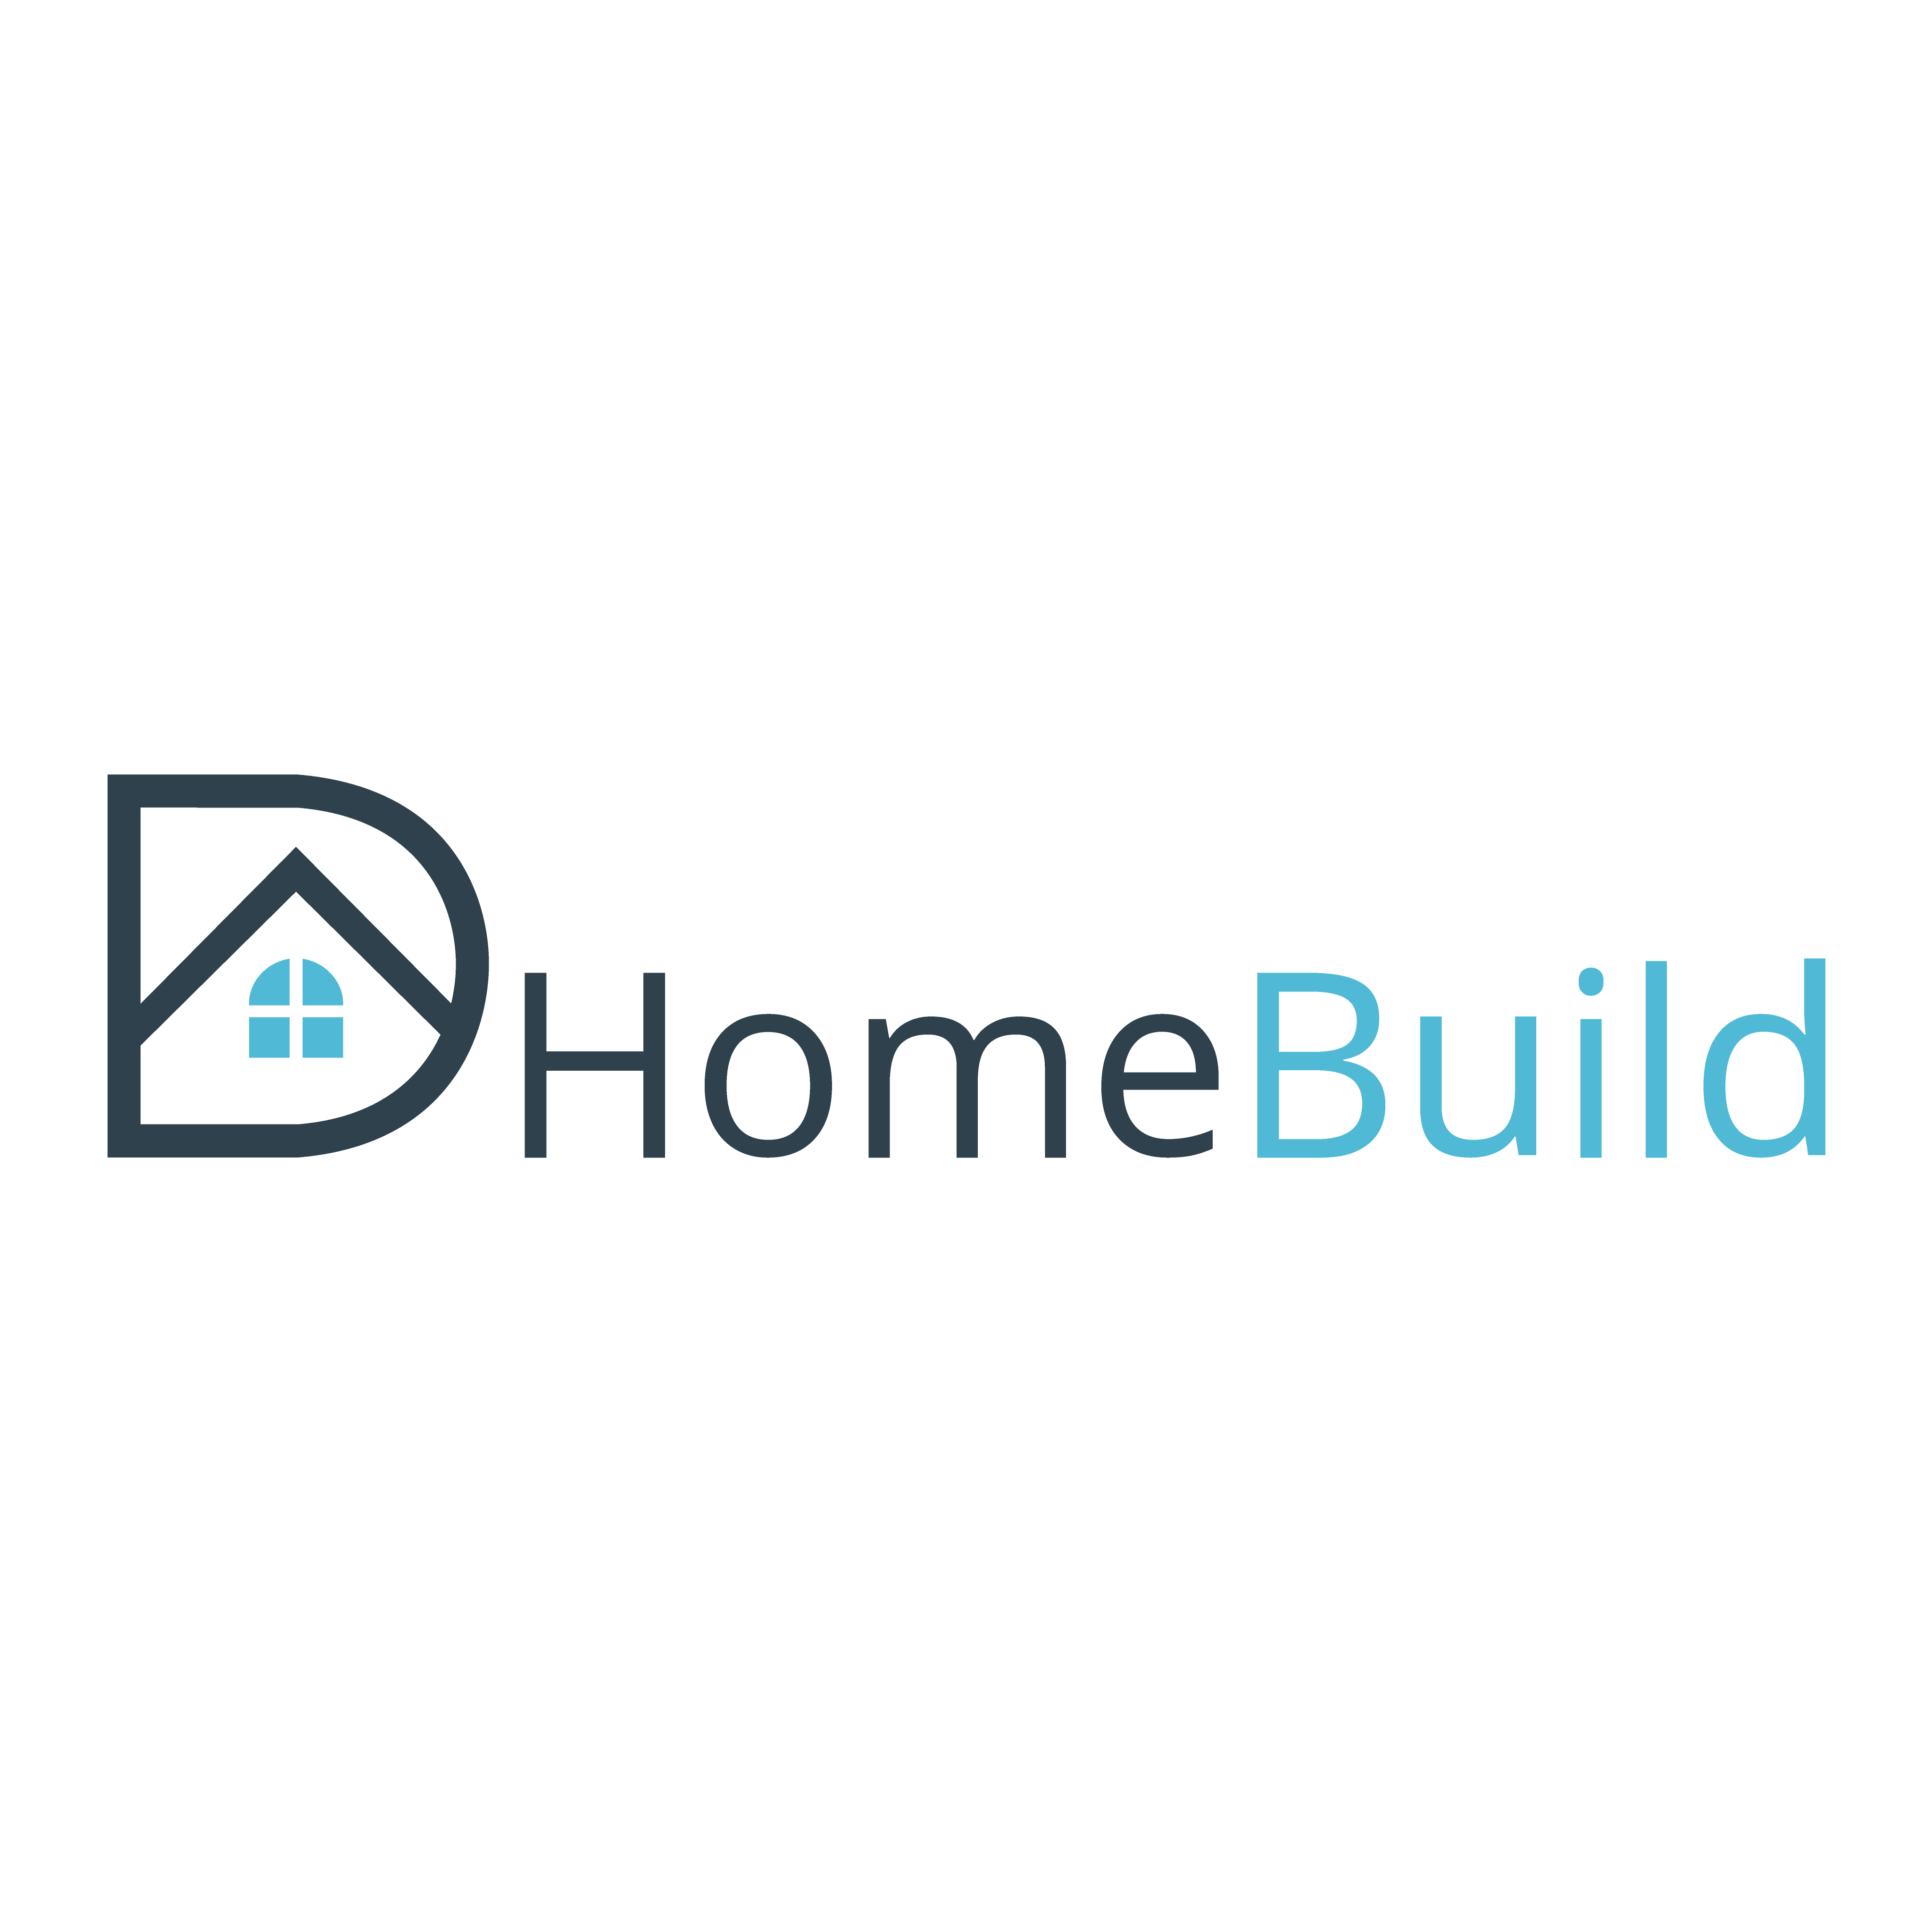 DHomeBuild-logo